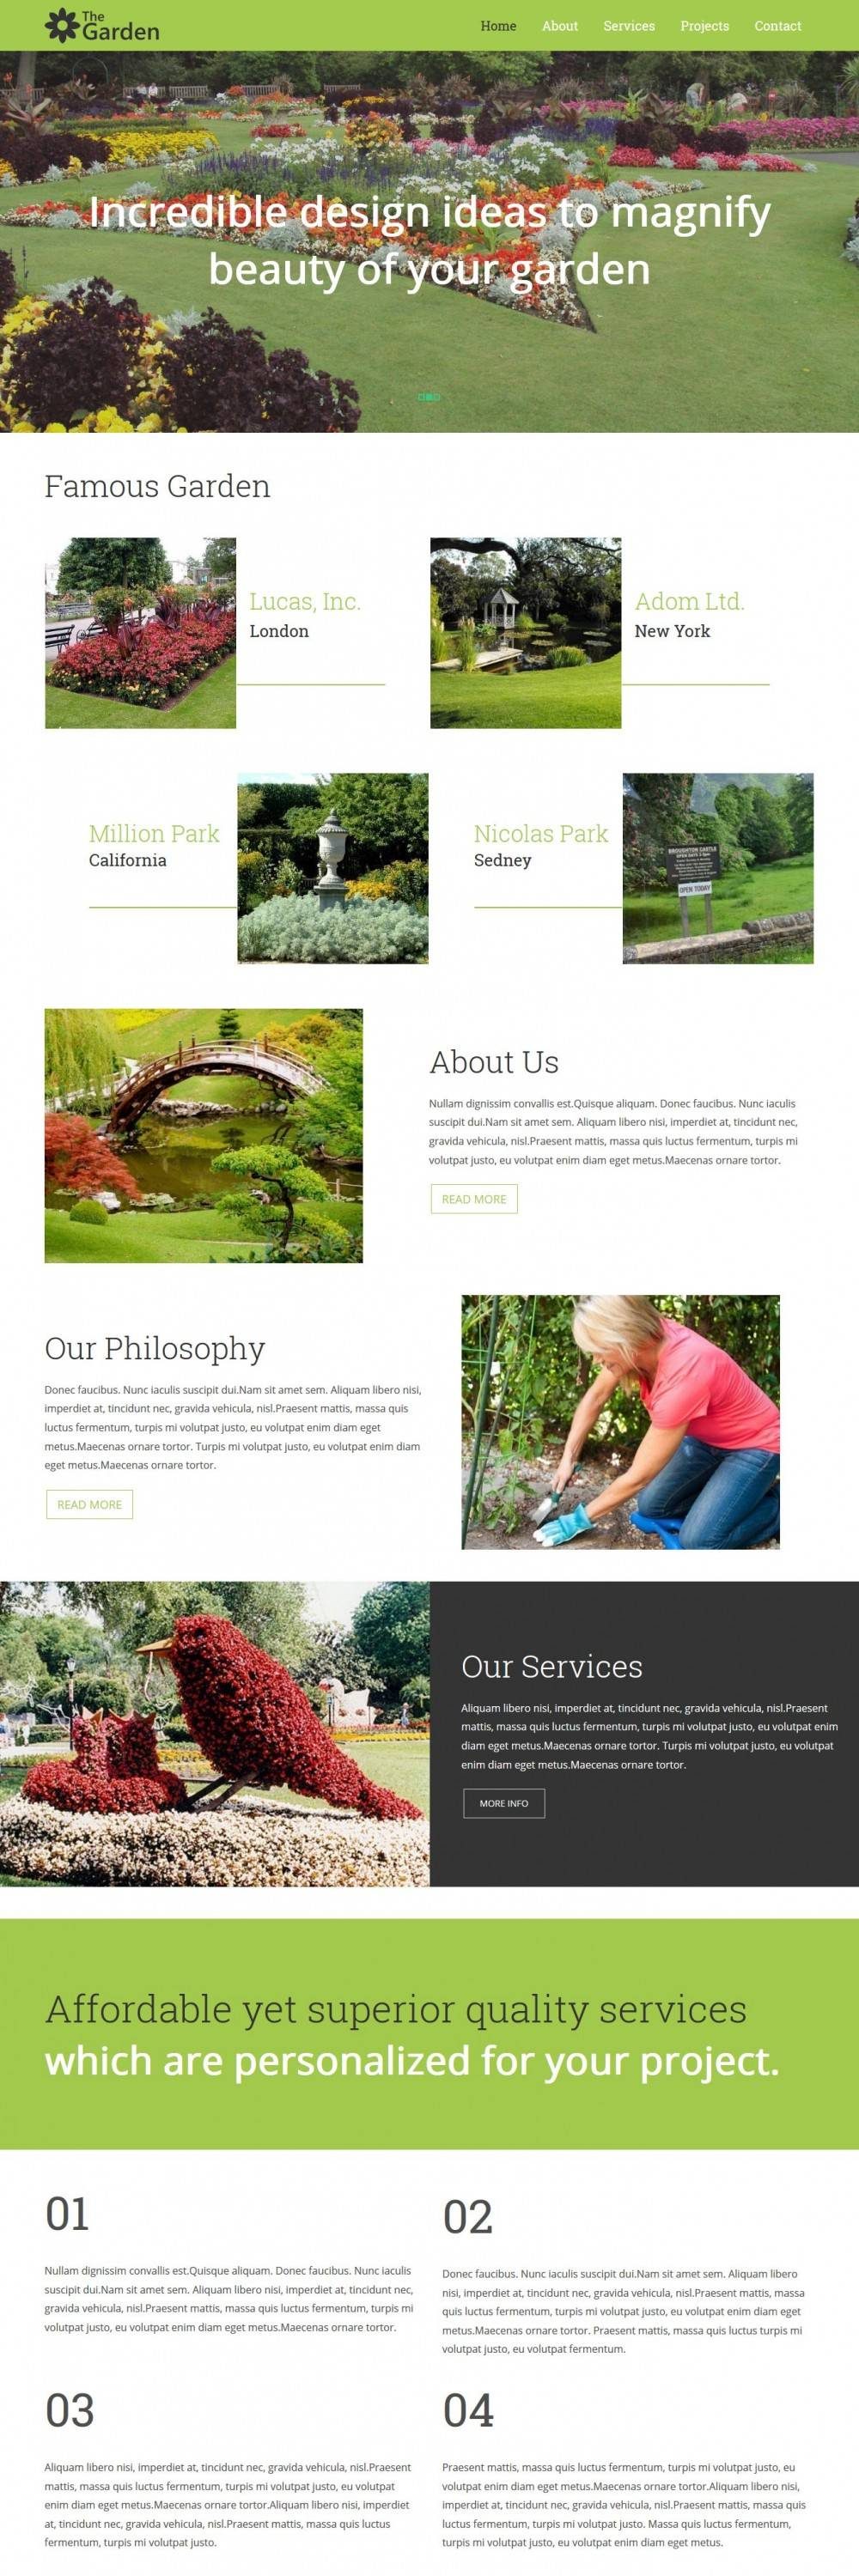 The Garden - Free WordPress Theme For Gardening Services